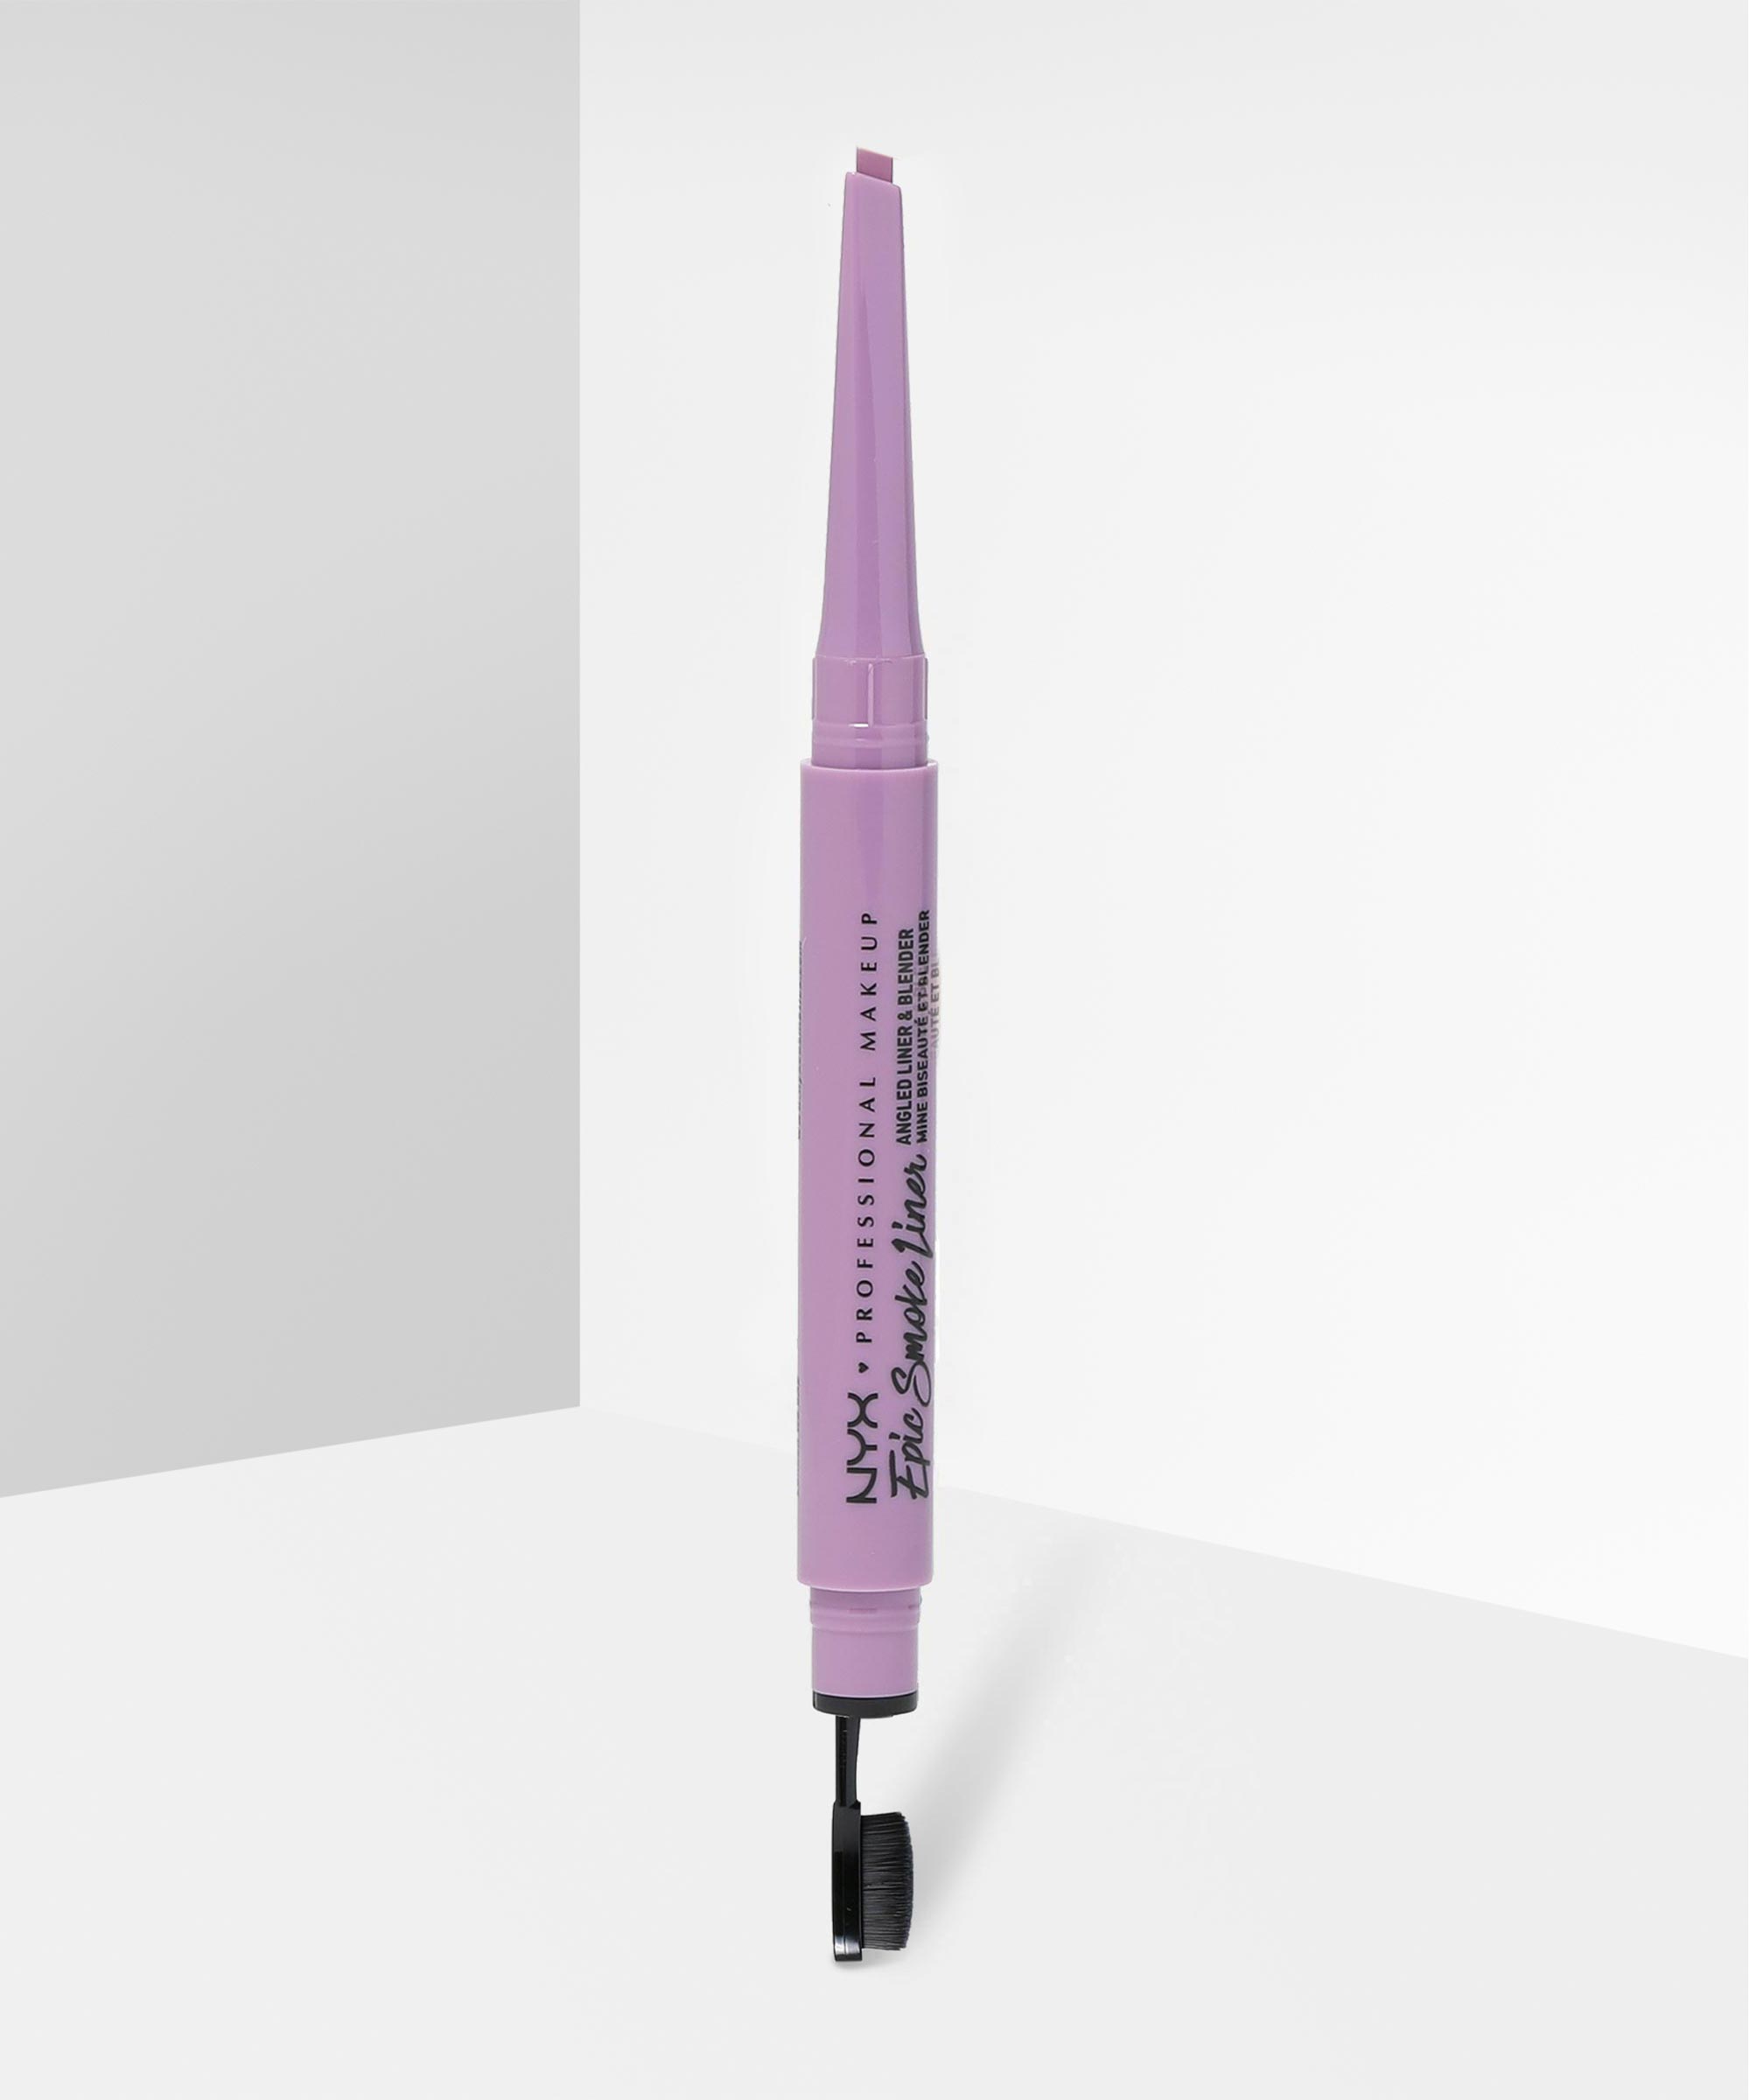 Makeup Liner NYX Eyeliner Smoke Epic BAY BEAUTY at Blendable Professional Stick